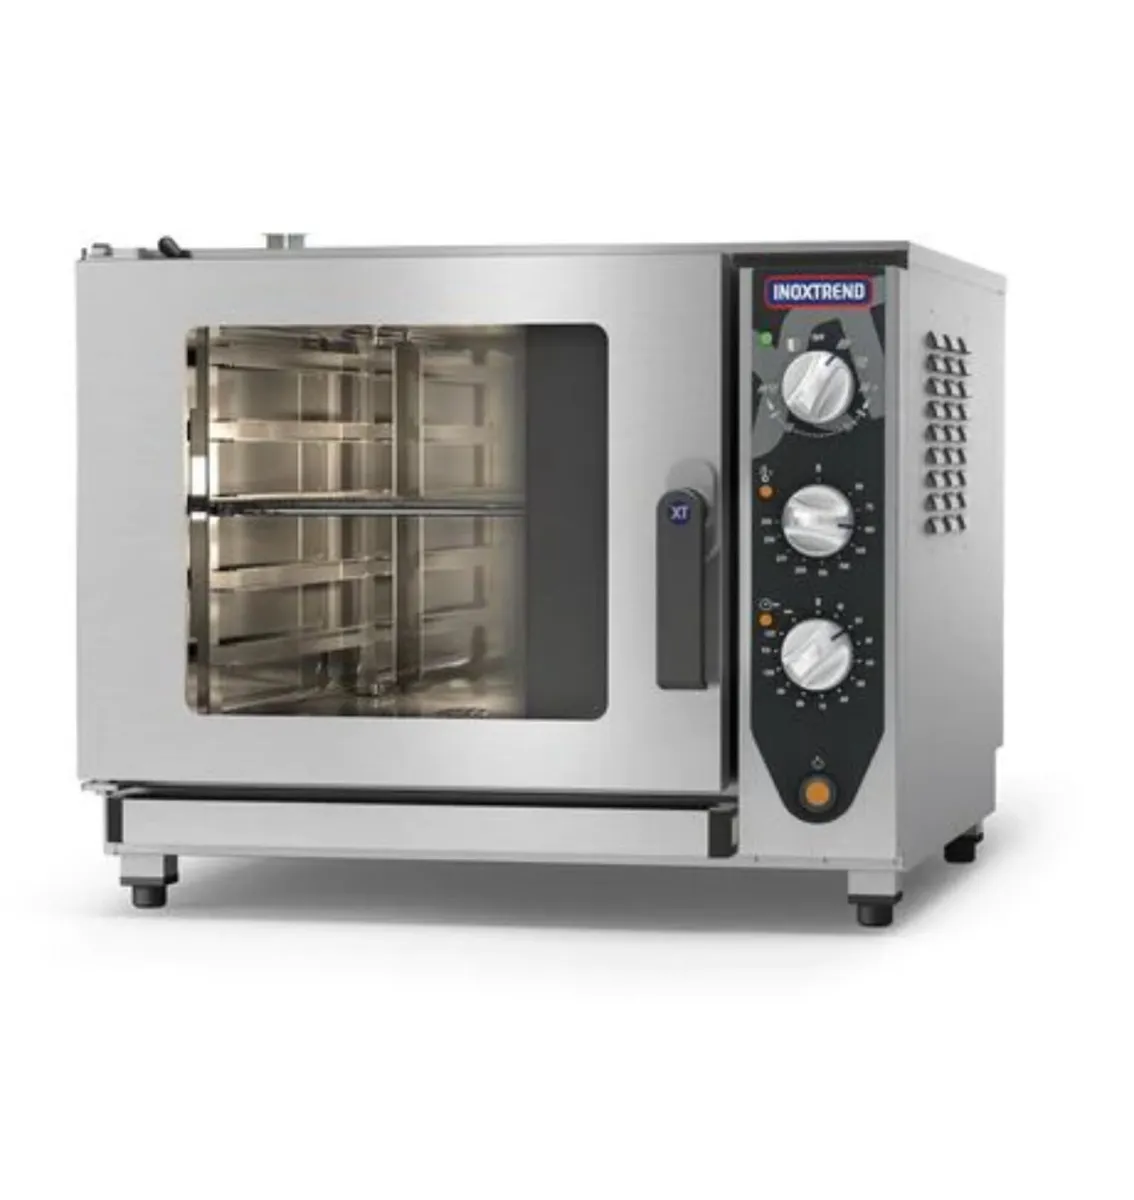 Inoxtrend Combi Oven - Image 1